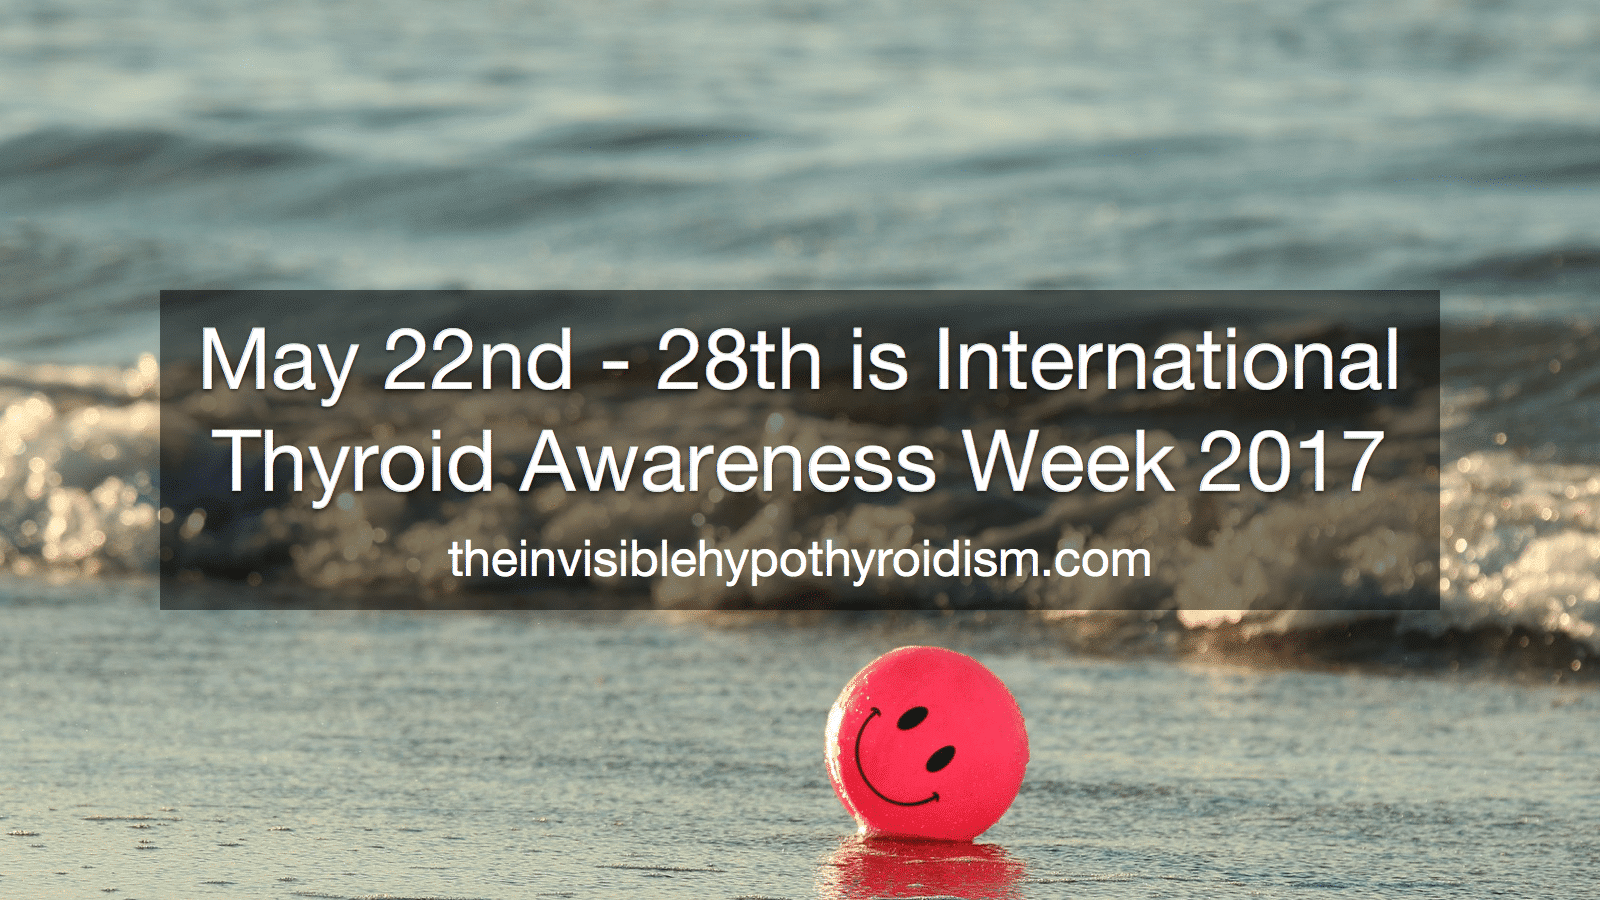 May 22nd - 28th is International Thyroid Awareness Week 2017